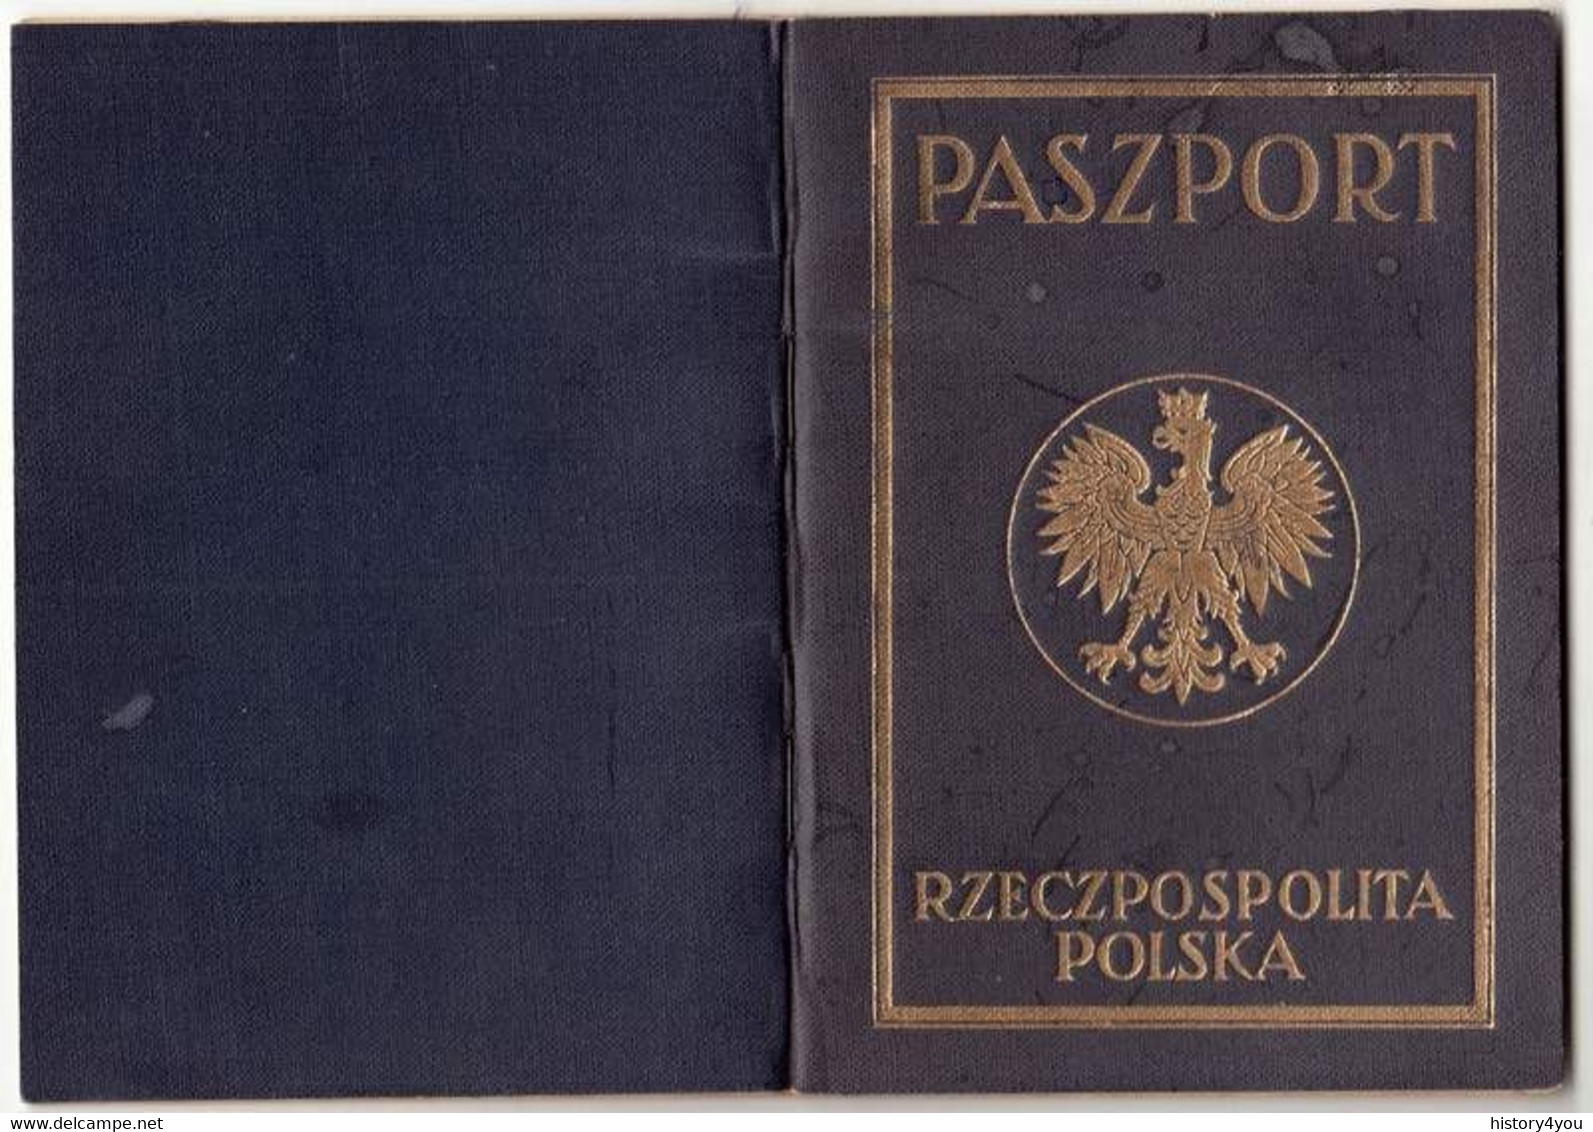 POLAND 1945 passport reisepass passeport issued in New York, top condition